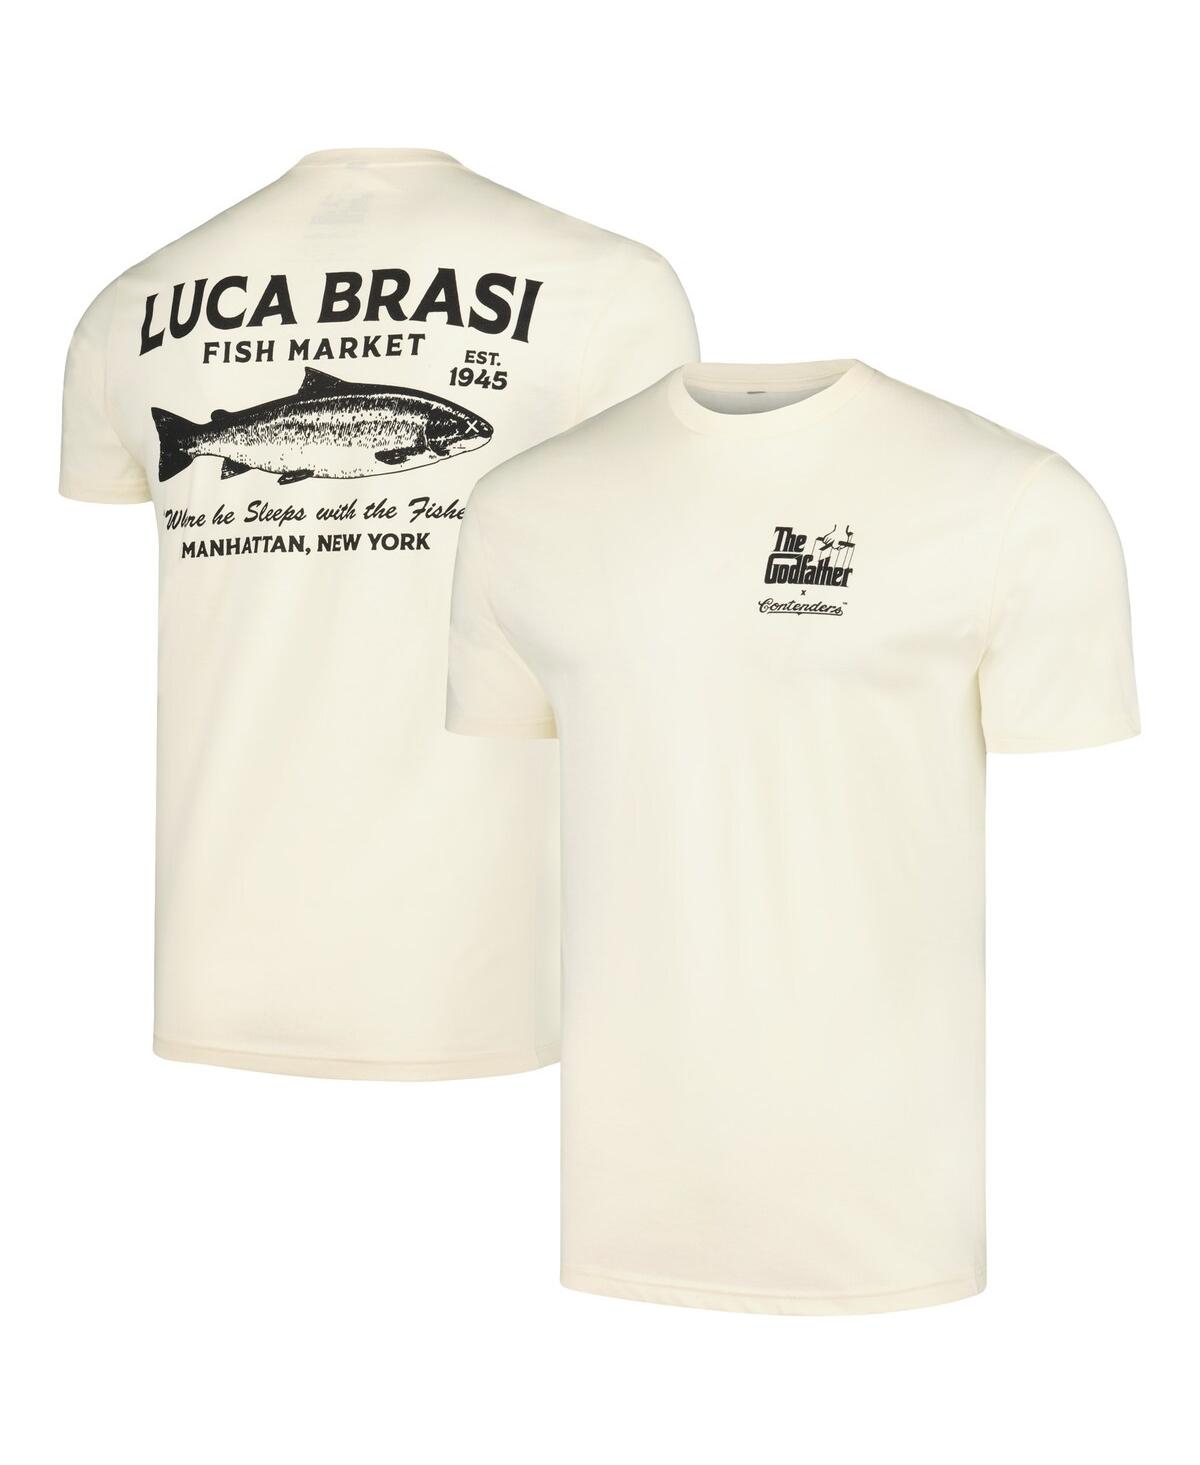 Contenders Clothing Men's  Natural The Godfather Luca Brasi Fish Market T-shirt